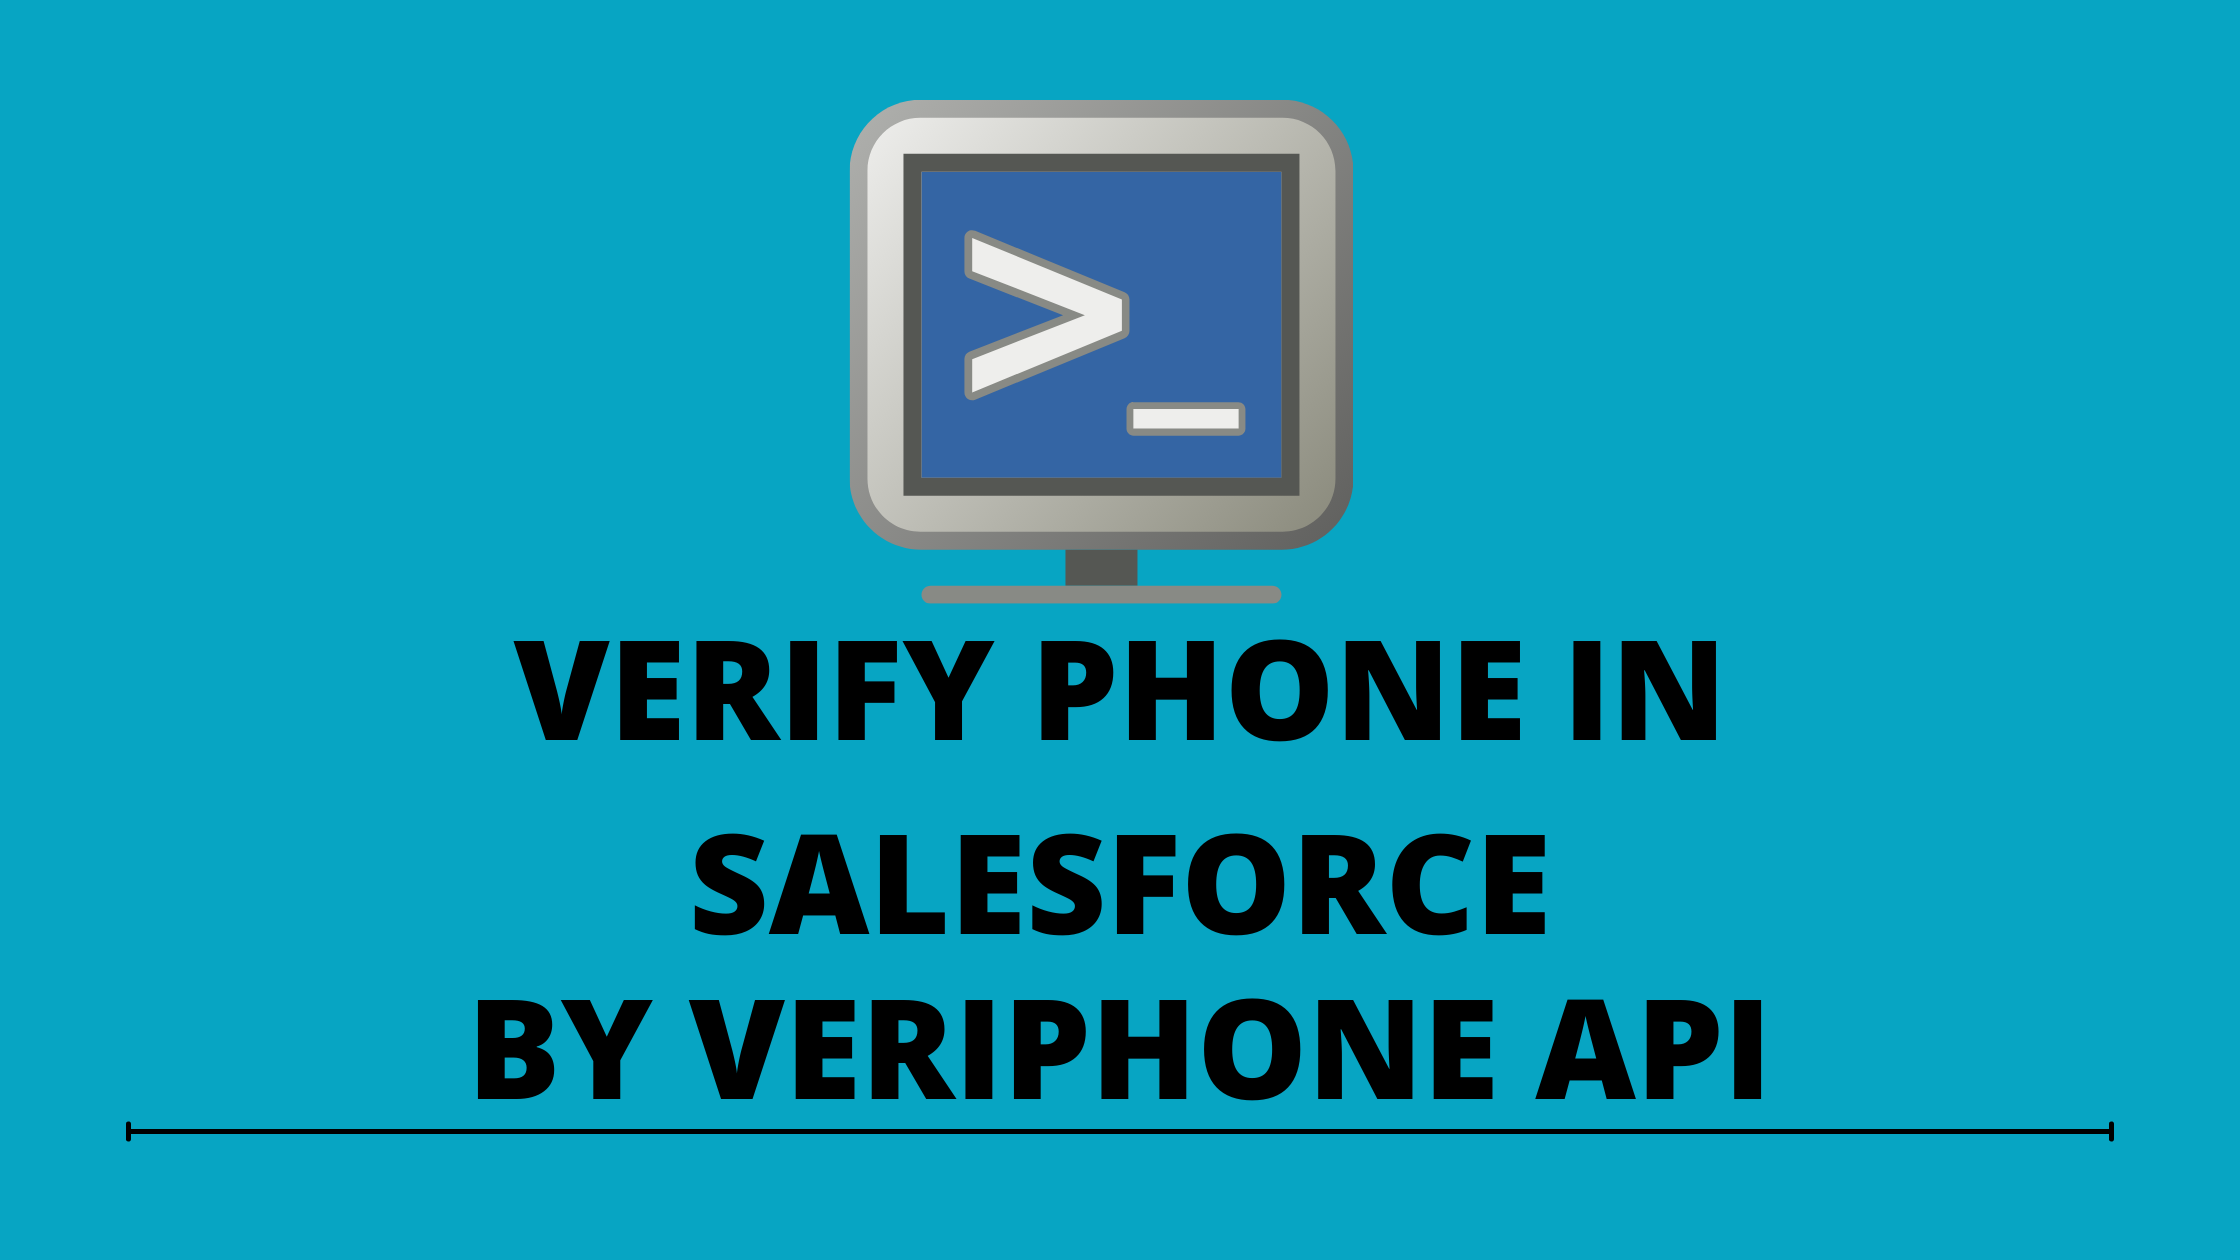 Verify phone in salesforce using Veriphone API